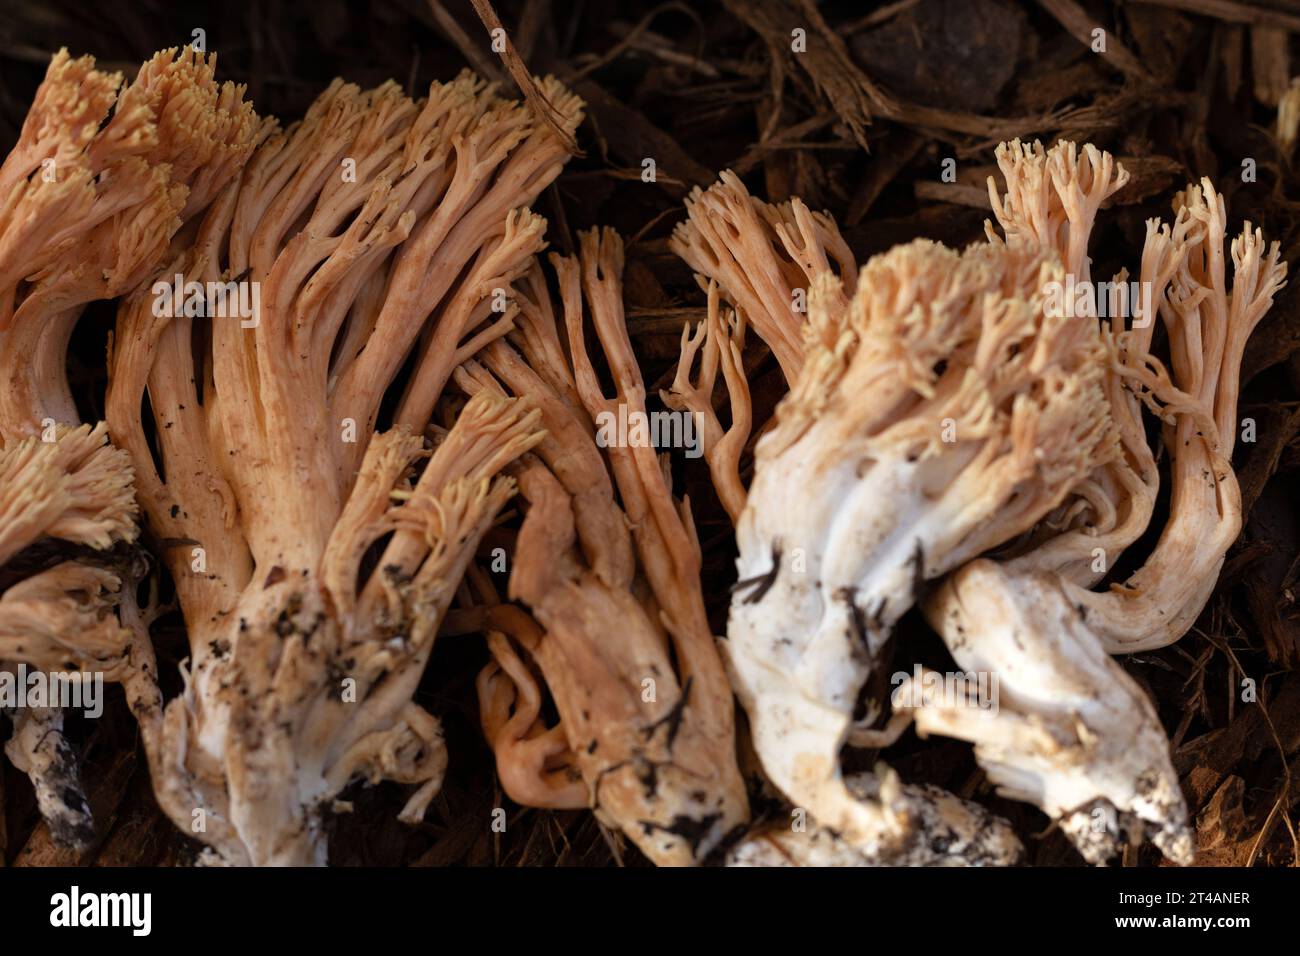 Ramaria formosa mushrooms. Stock Photo